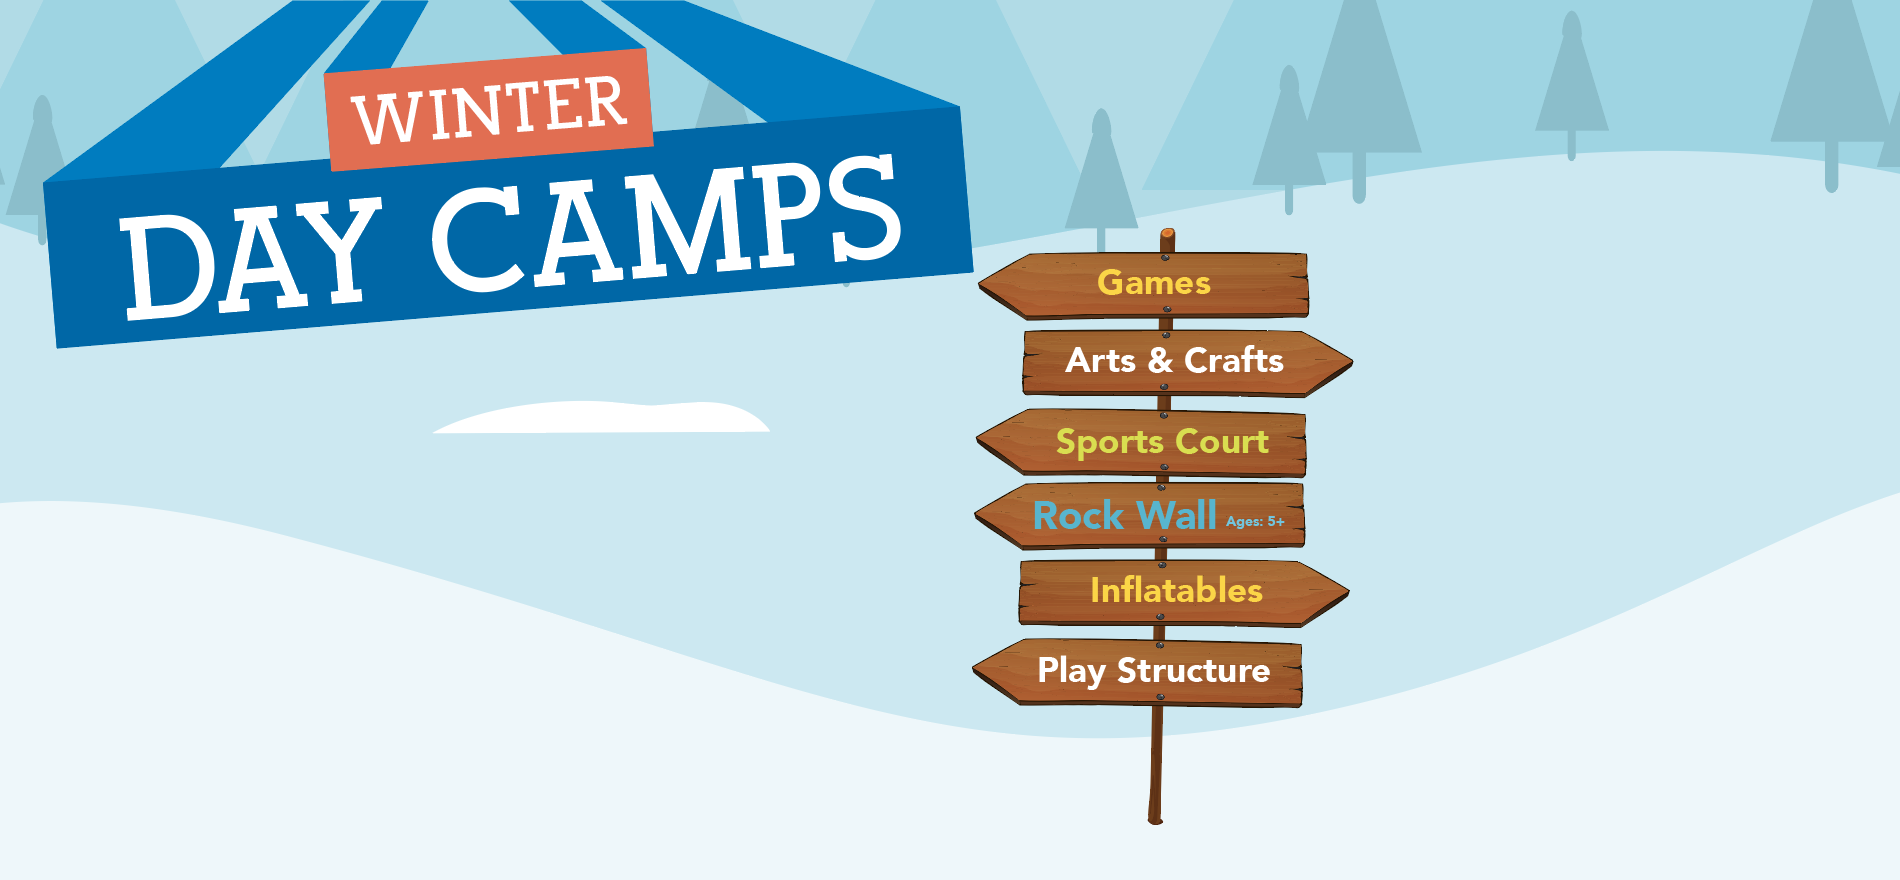 <a style="color:#fff;" href="https://adventureplex.campbrainregistration.com/">Winter Camps Dec. 19 - Jan. 6</a>